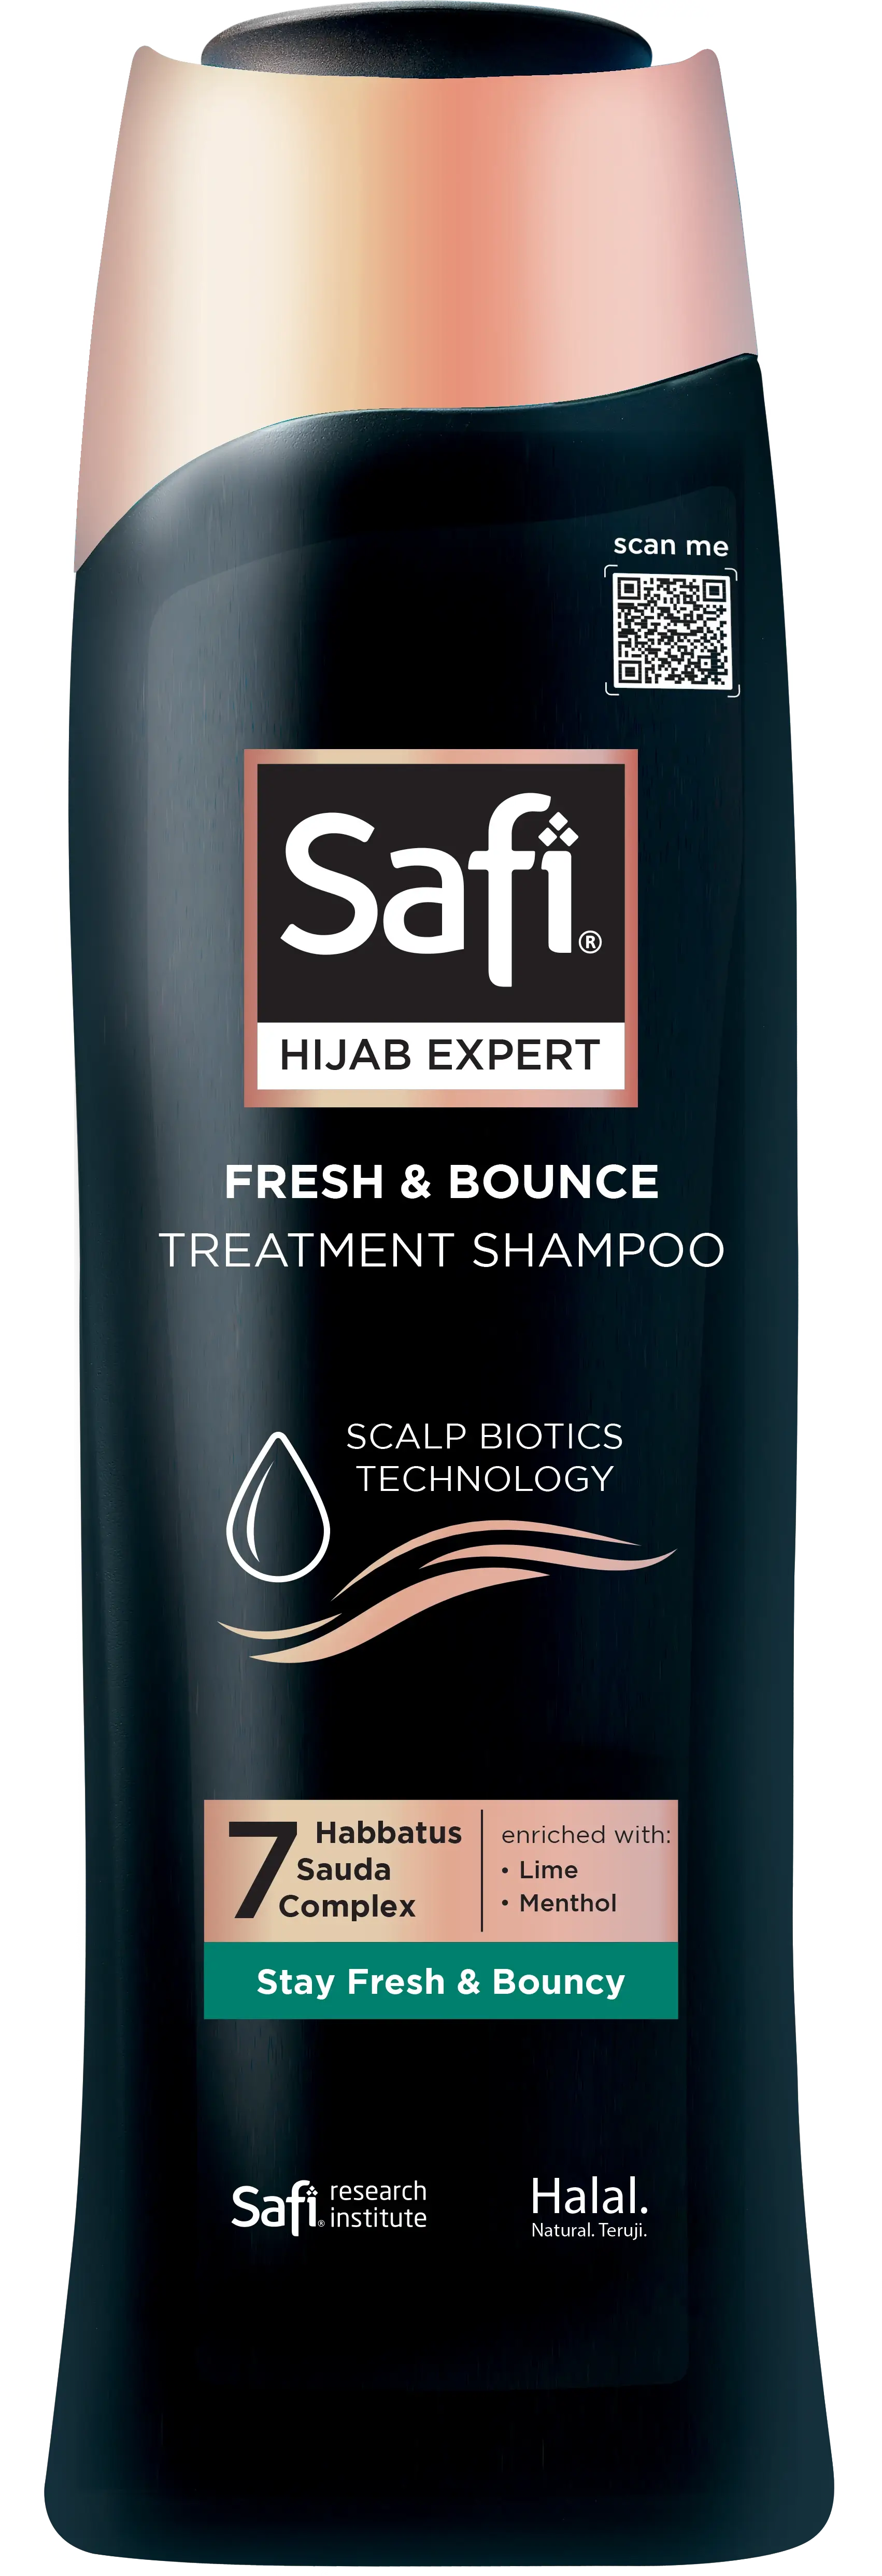 Safi Hijab Expert Fresh & Bounce Treatment Shampoo hadir dengan Hijab Scalp Microbiome Technology dan 7 Habbatus Sauda Complex. - Safi Hijab Expert Fresh & Bounce Treatment Shampoo